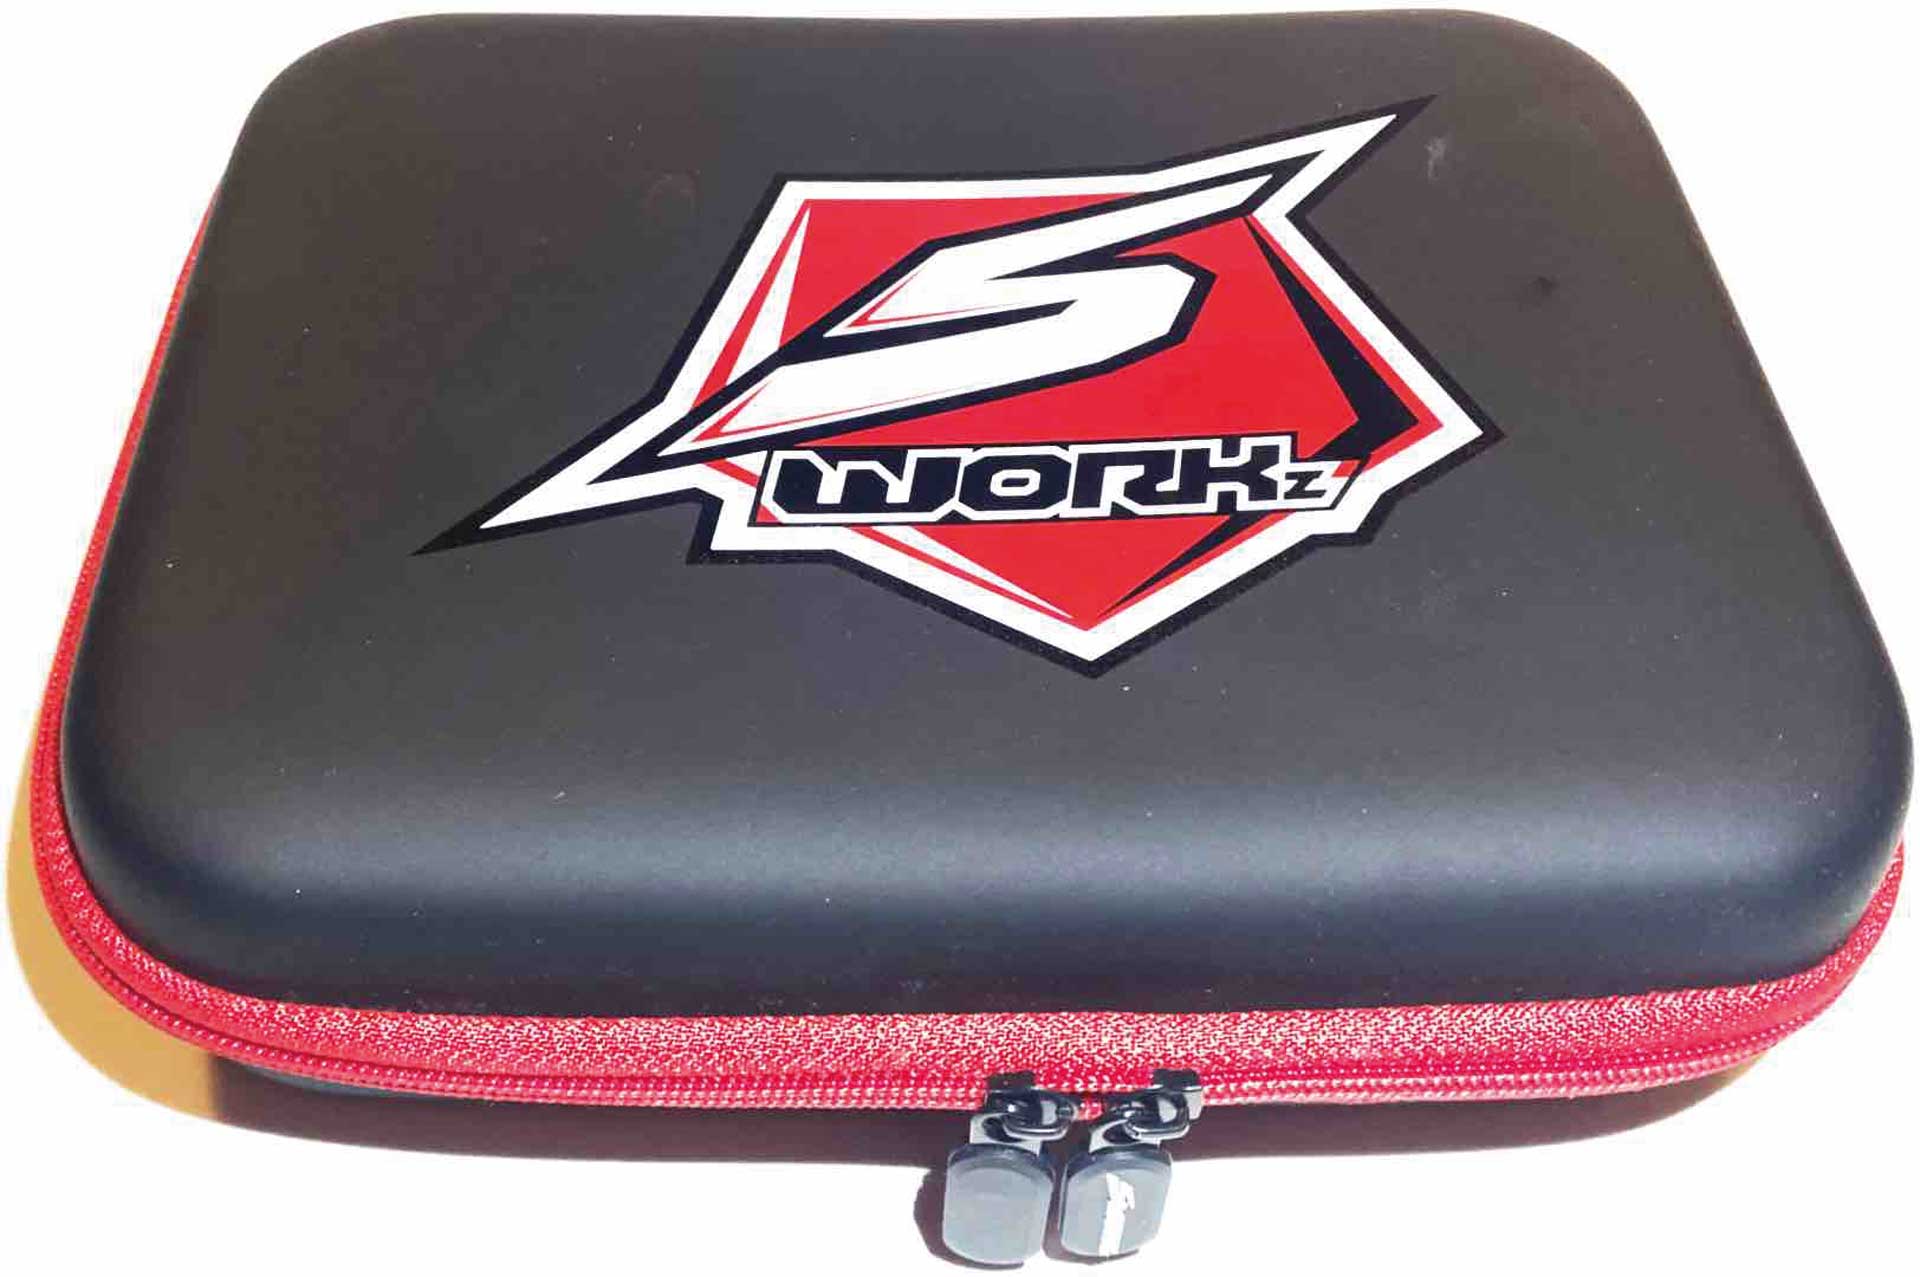 SWORKZ Hard Case Bag with Intelligent Foam LxWxH: 20x16x6cm